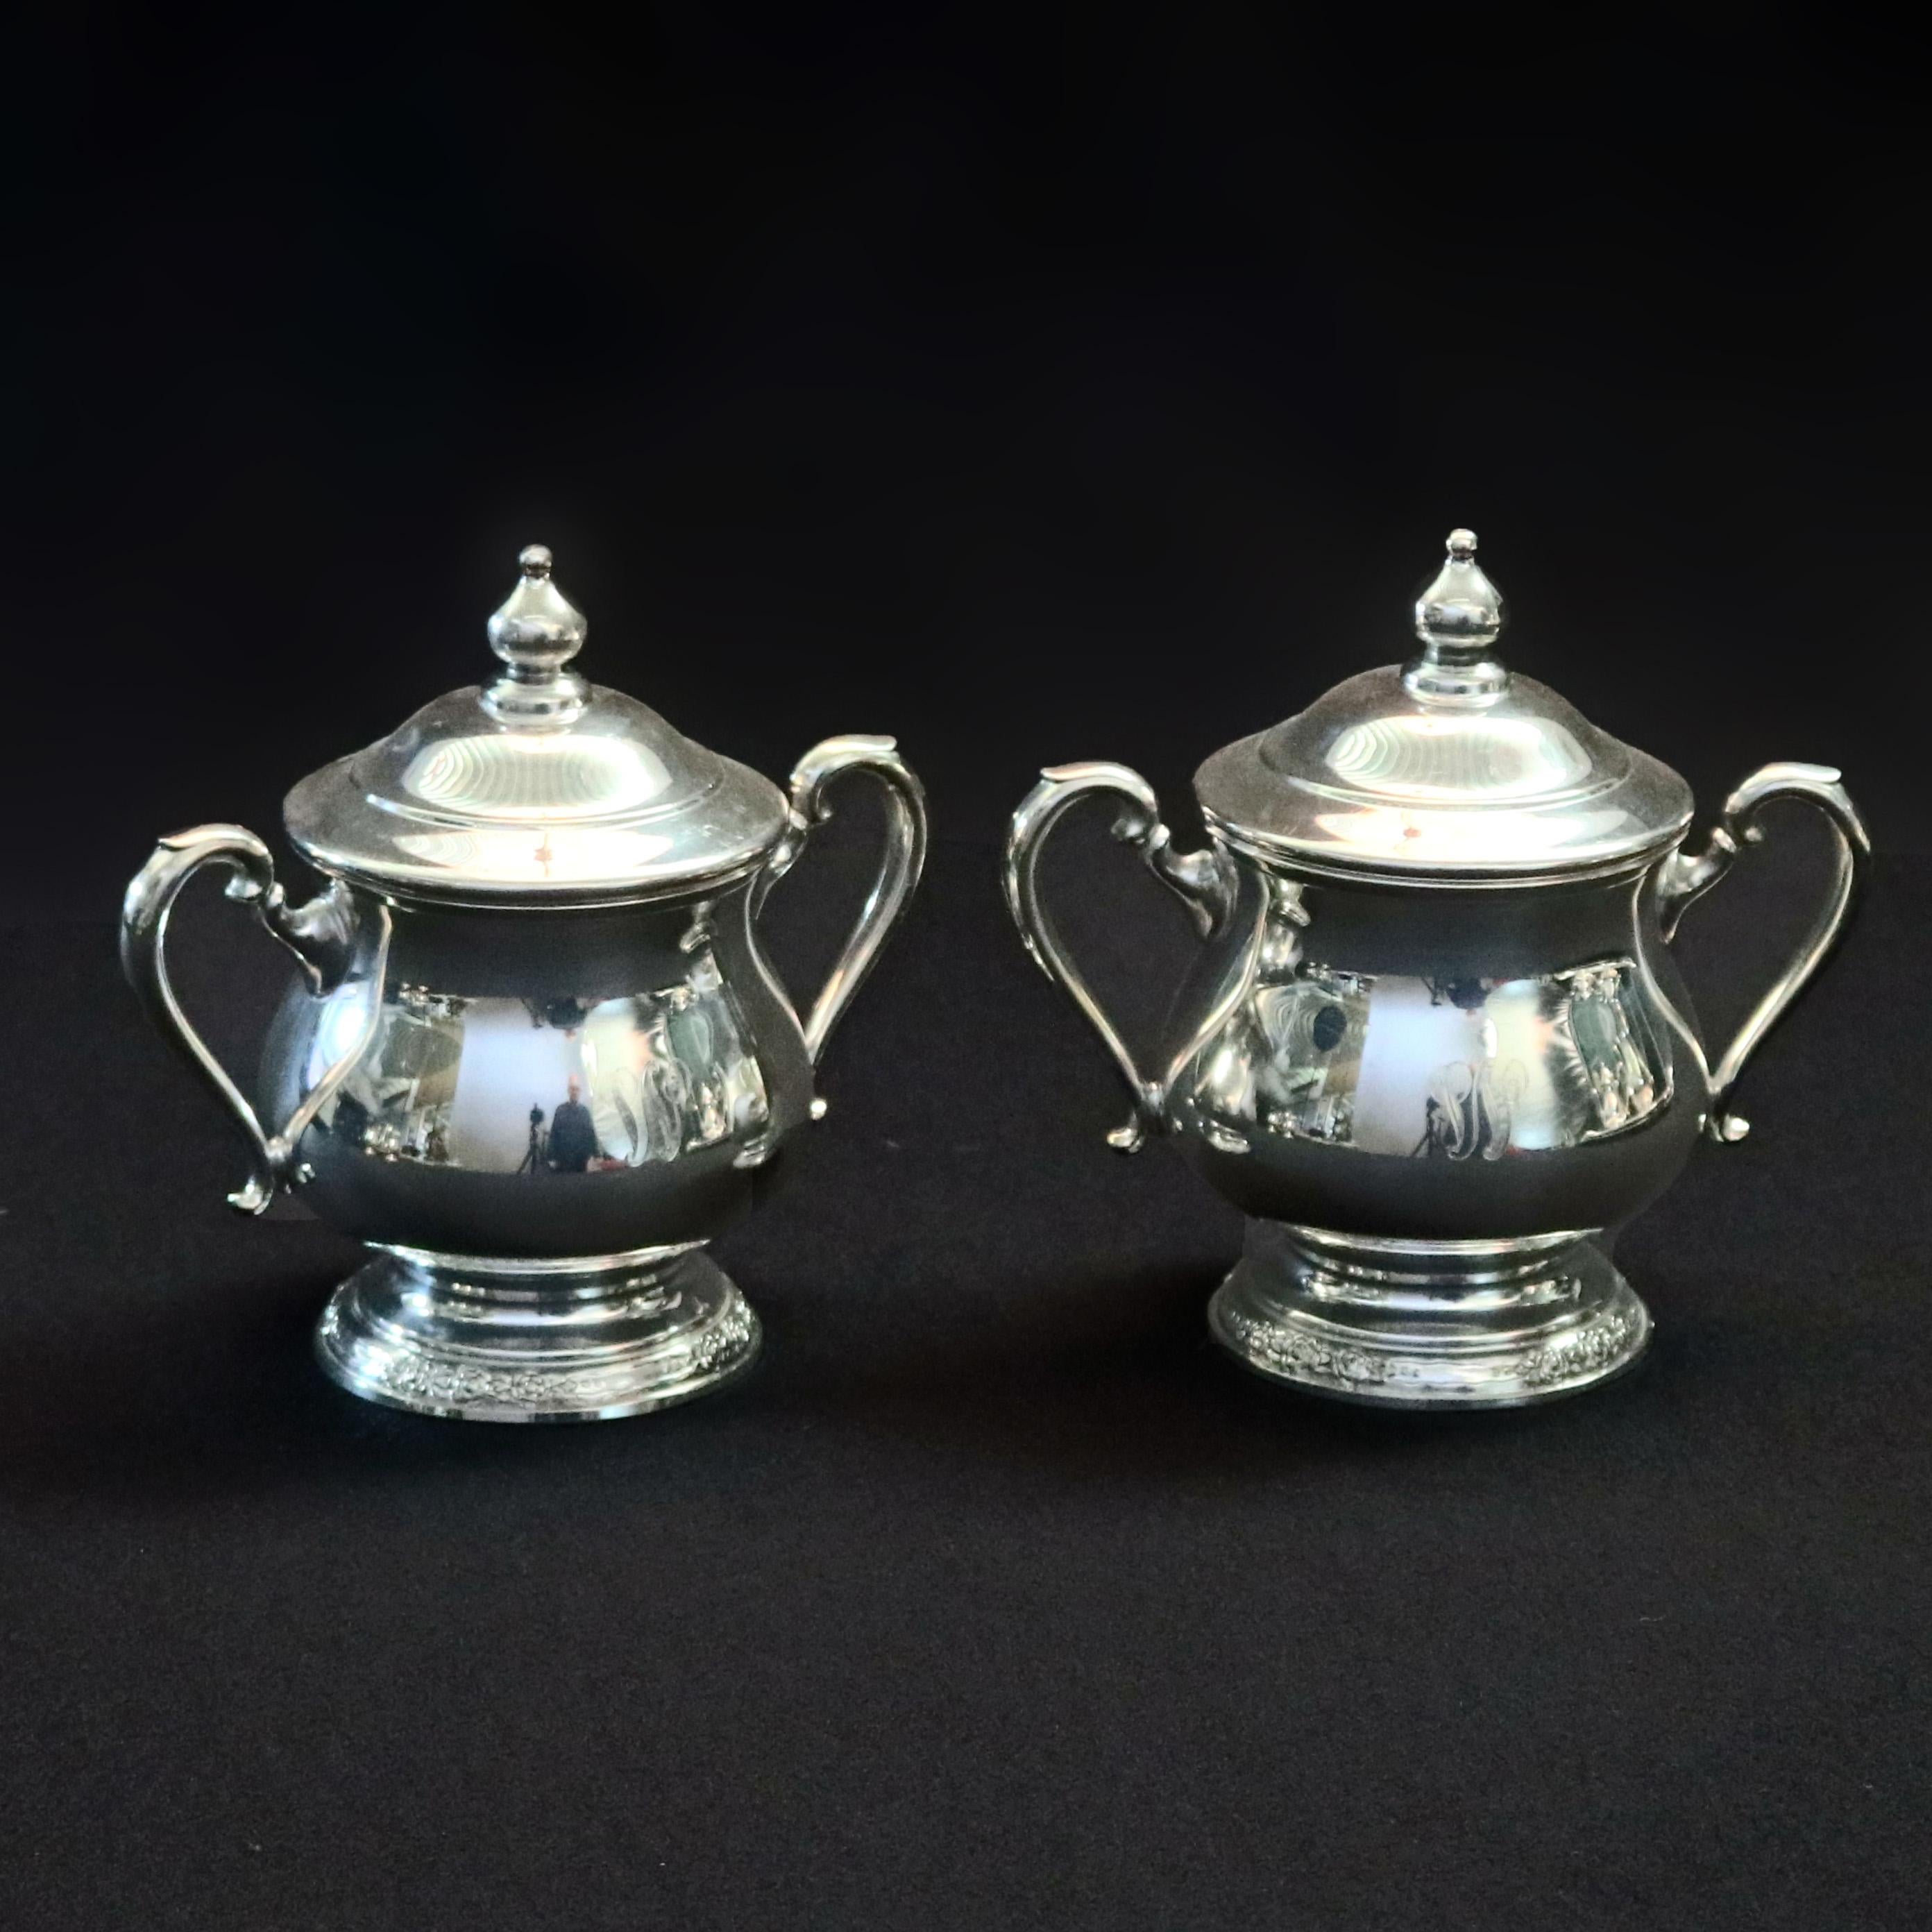 8-Piece Silver Plate Coffee & Tea Service Monogrammed 